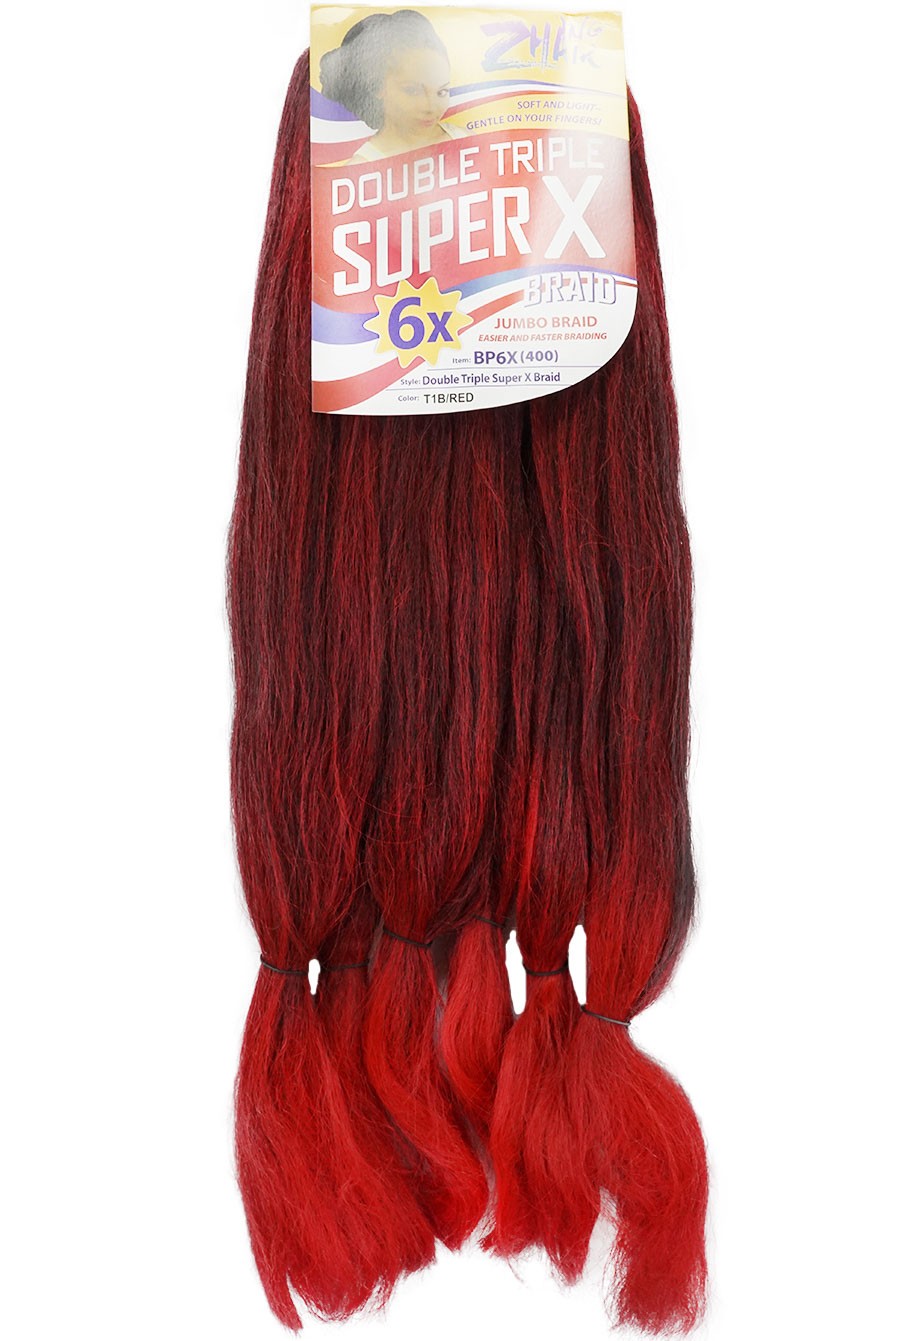 Cabelo Sintético - Zhang hair jumbo - Super X (400g) - Cor: Preto e Vermelho (T1B/RED)